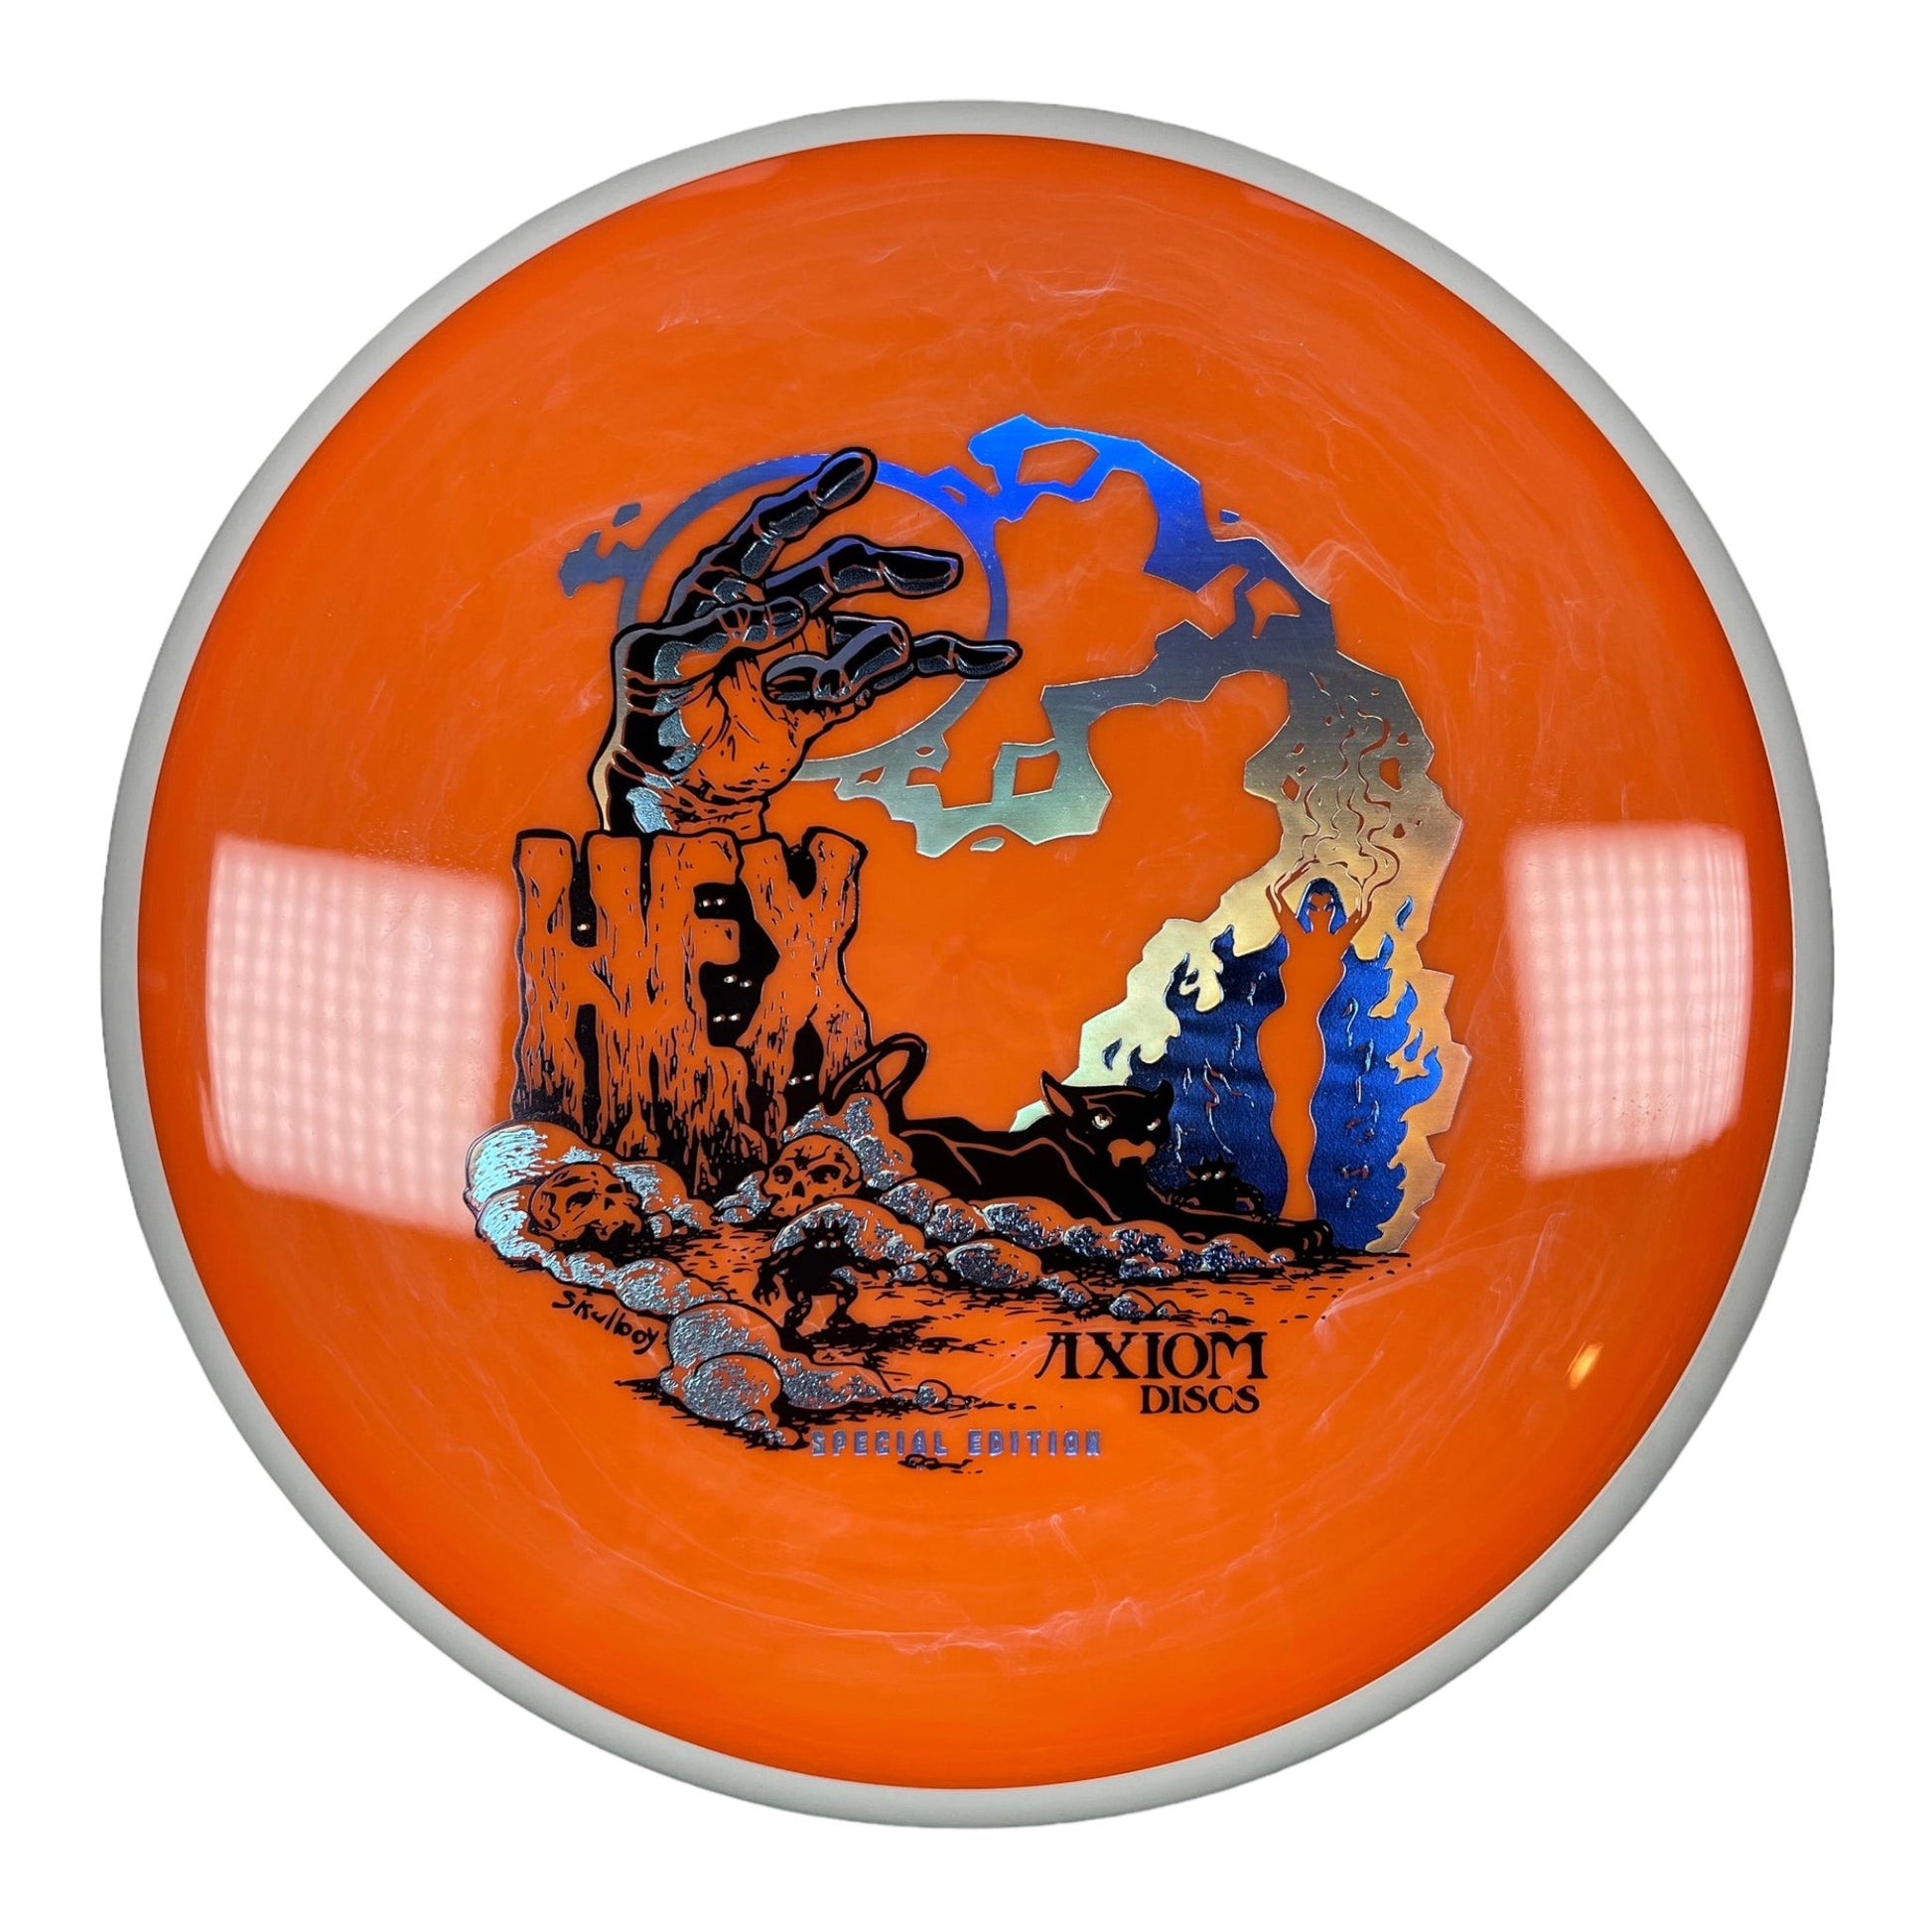 Axiom Discs Hex | Neutron | Orange/White 178g (Special Edition) Disc Golf